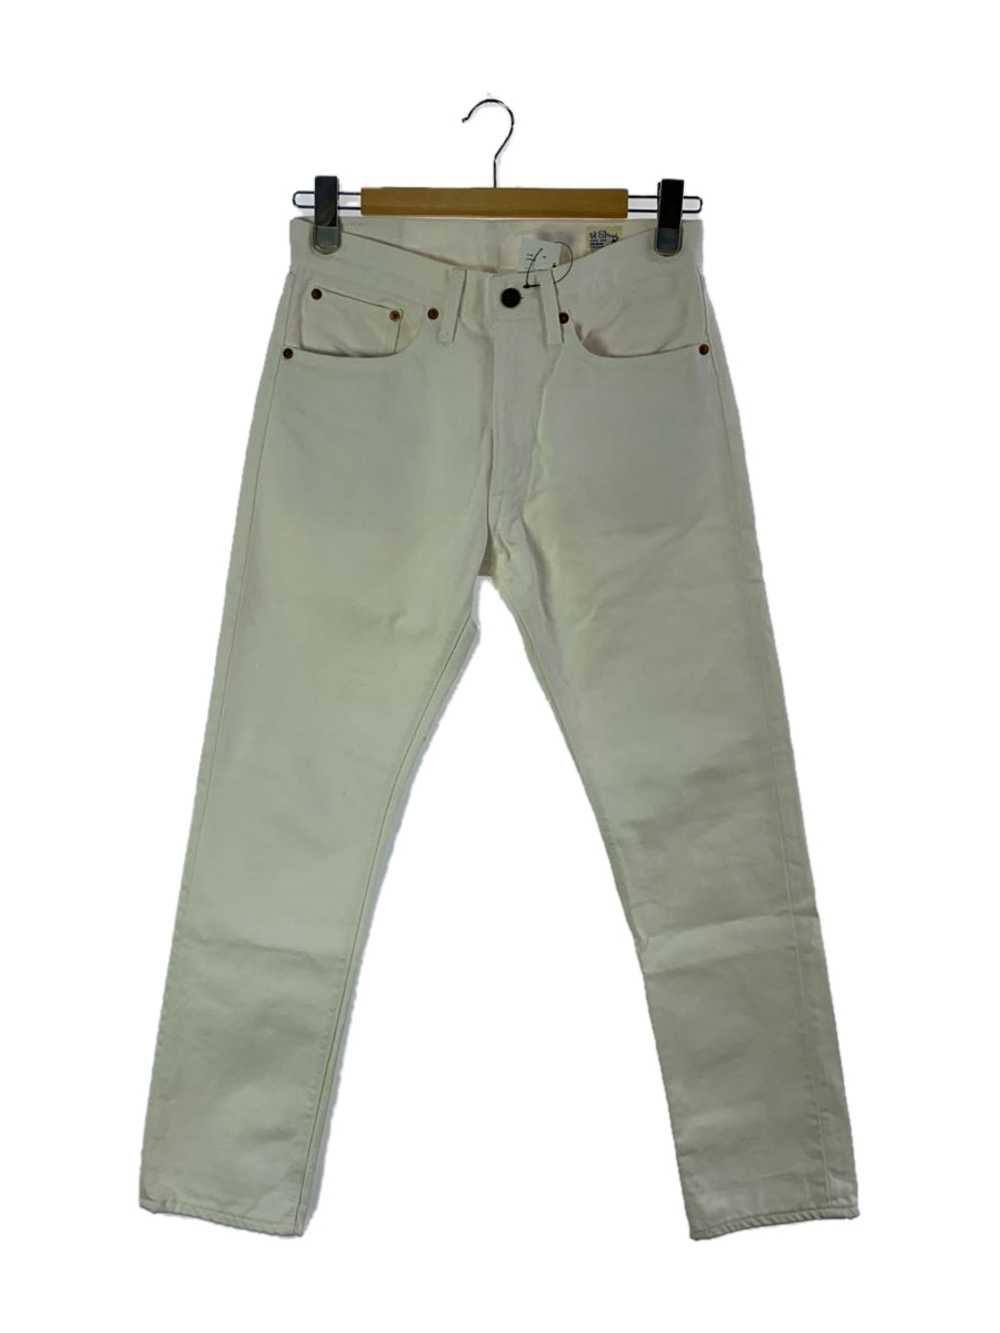 Men's OrSlow Pants/S/Denim/White/107 - image 1